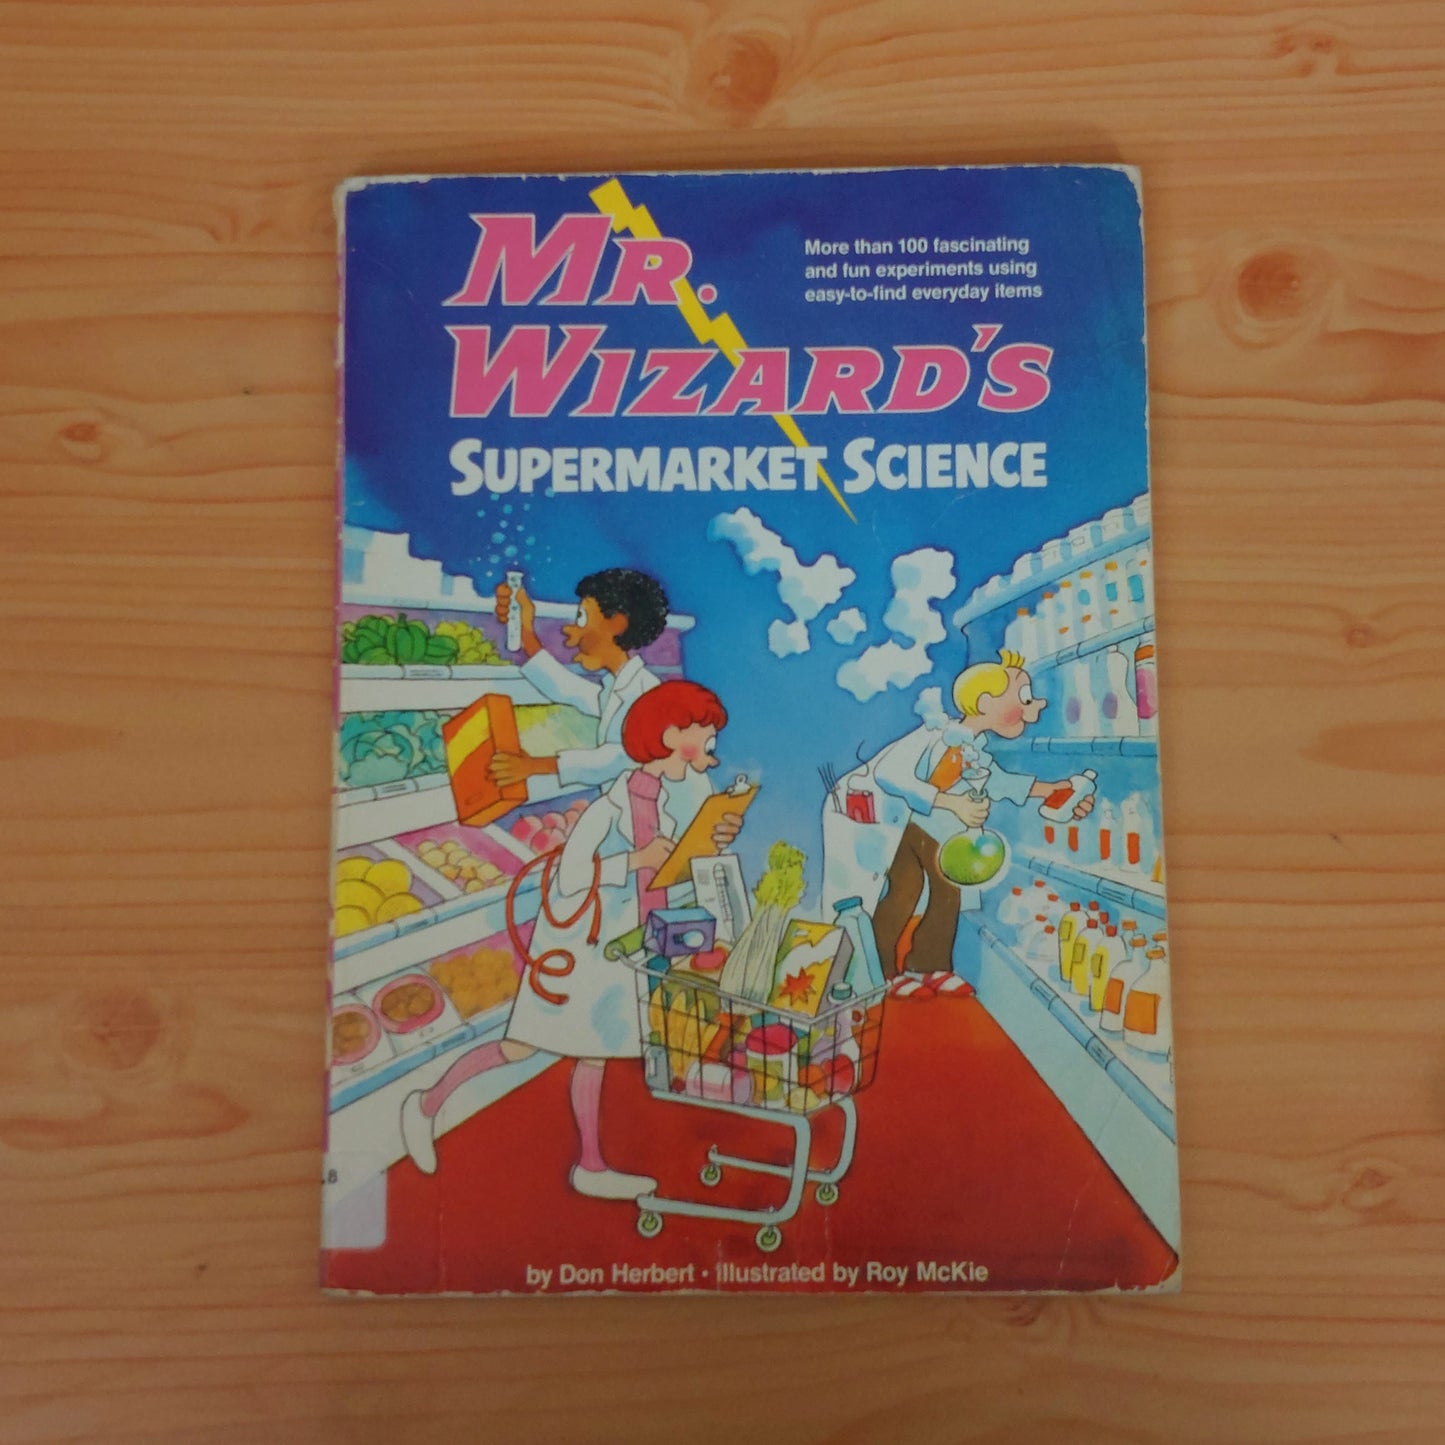 Mr. Wizard's Supermarket Science